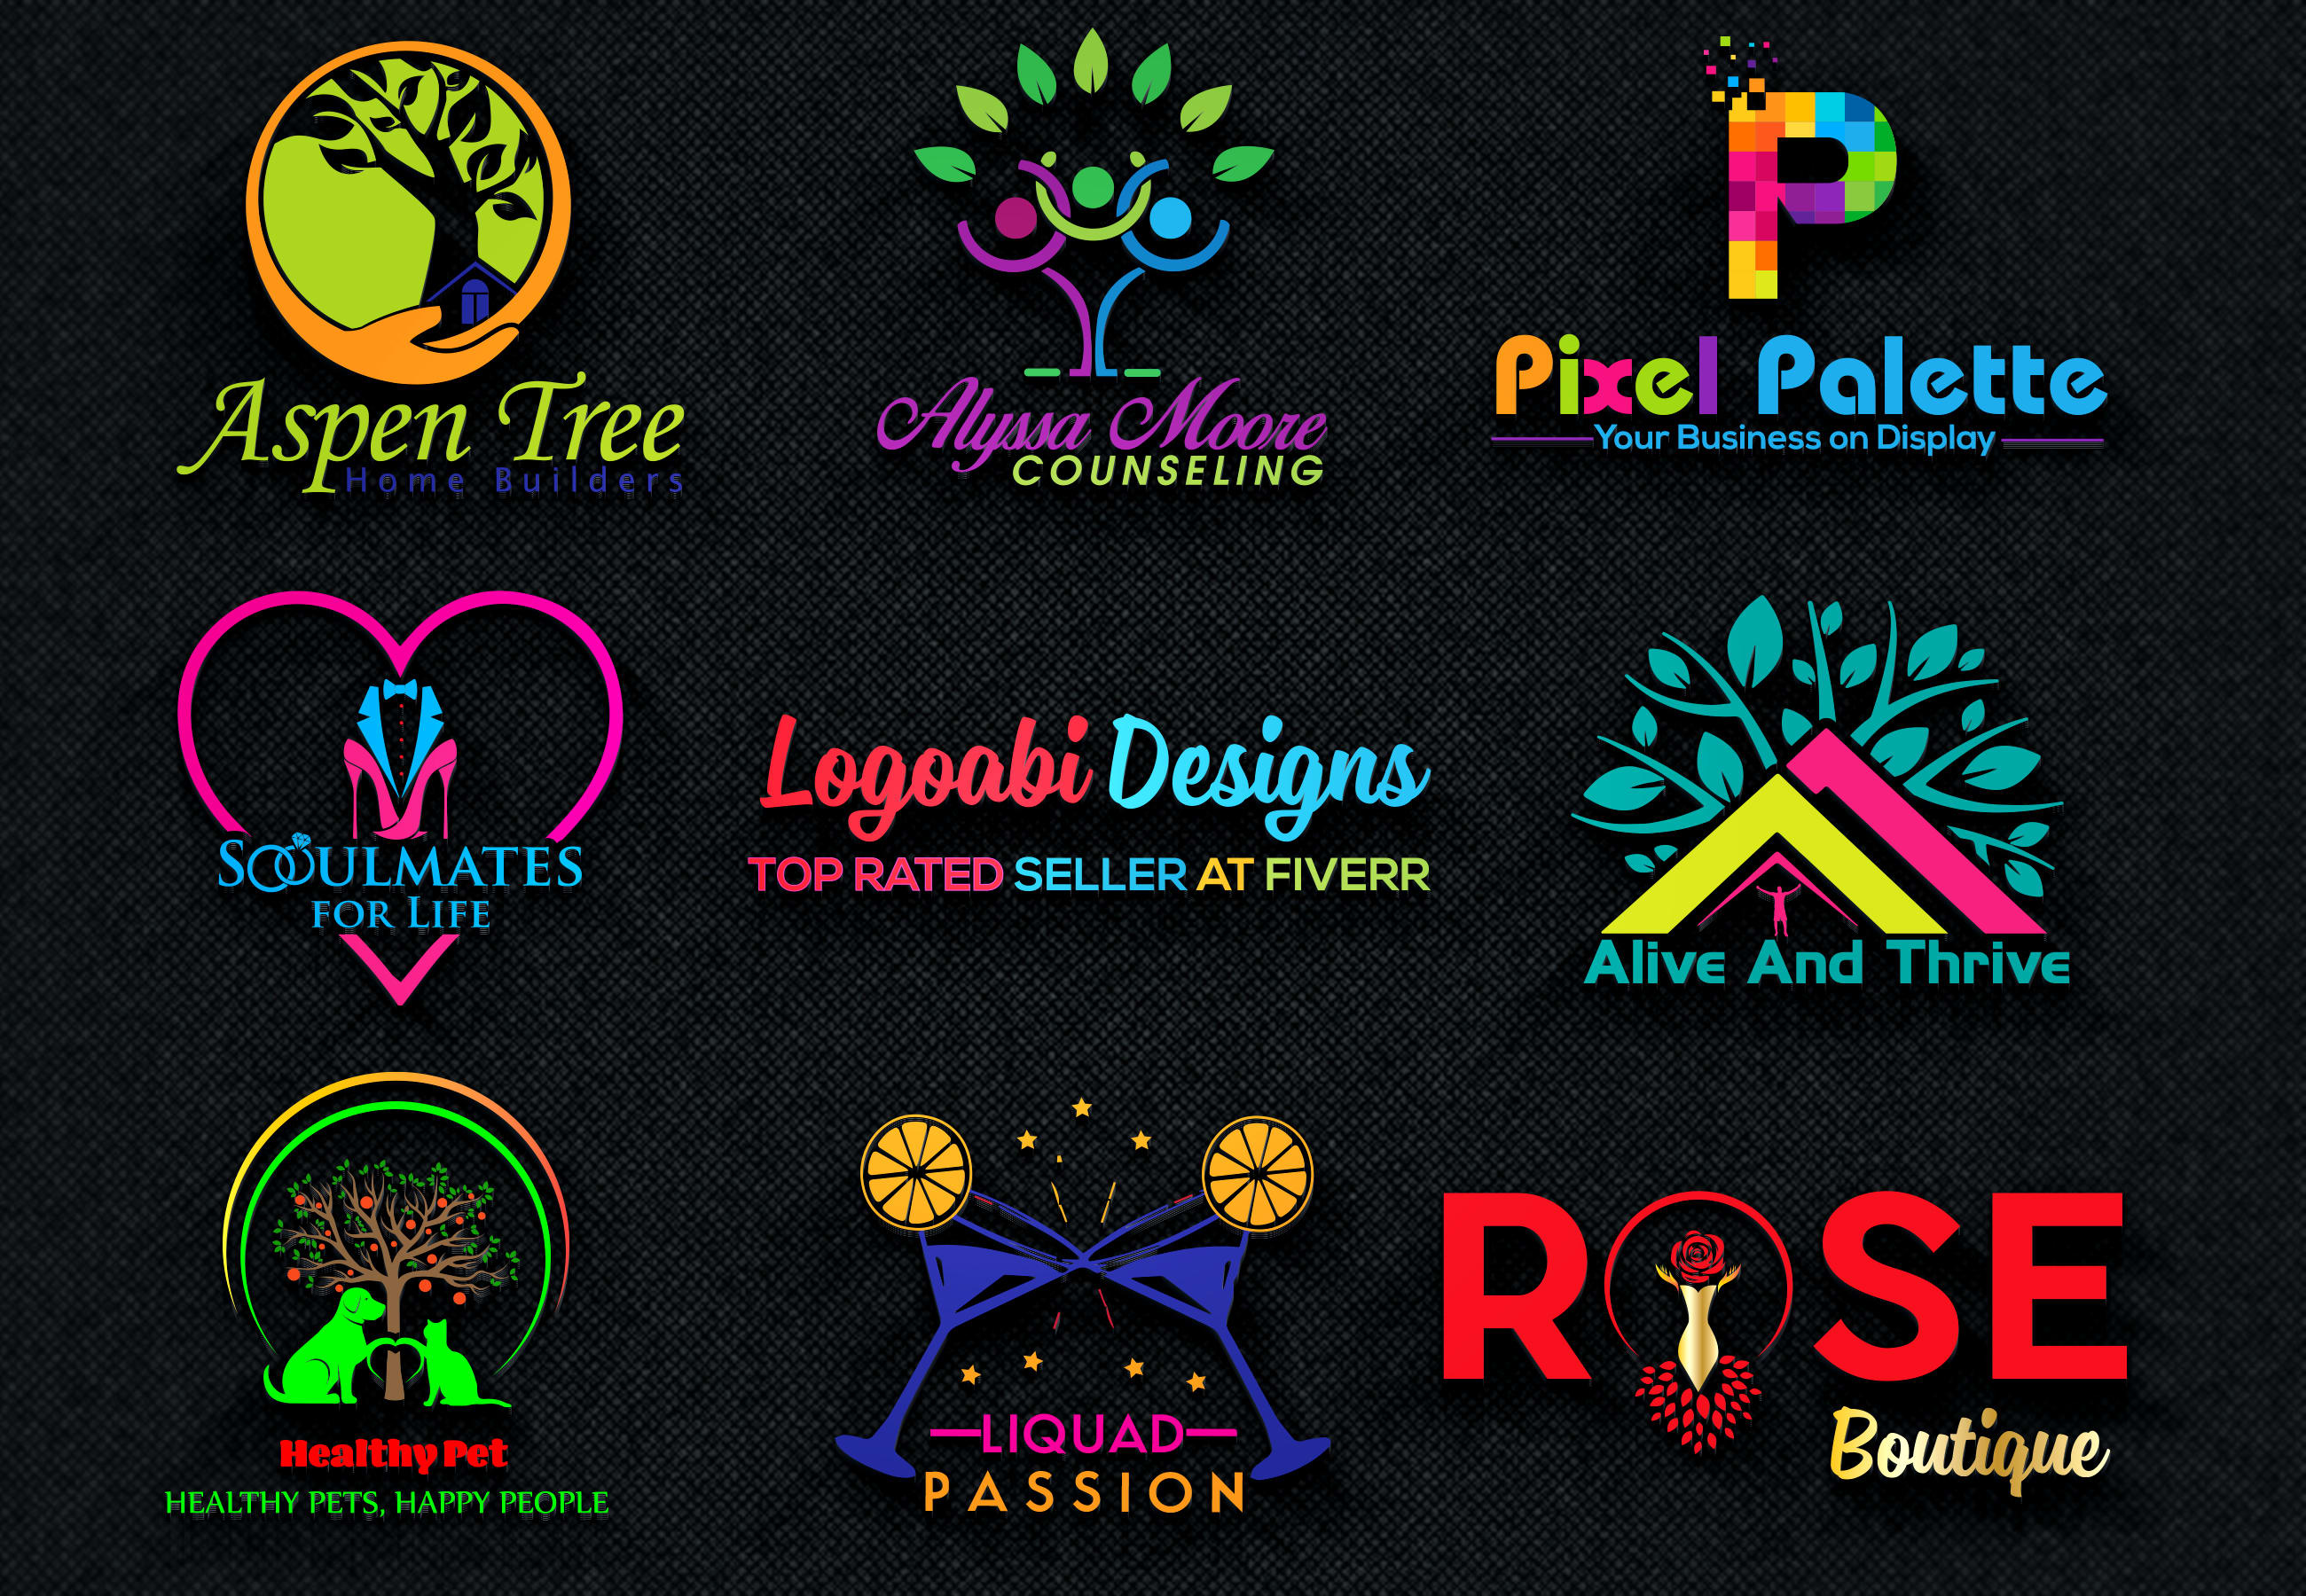 Fiverr Logo Design Promo Code - Fiverr Logo Examples